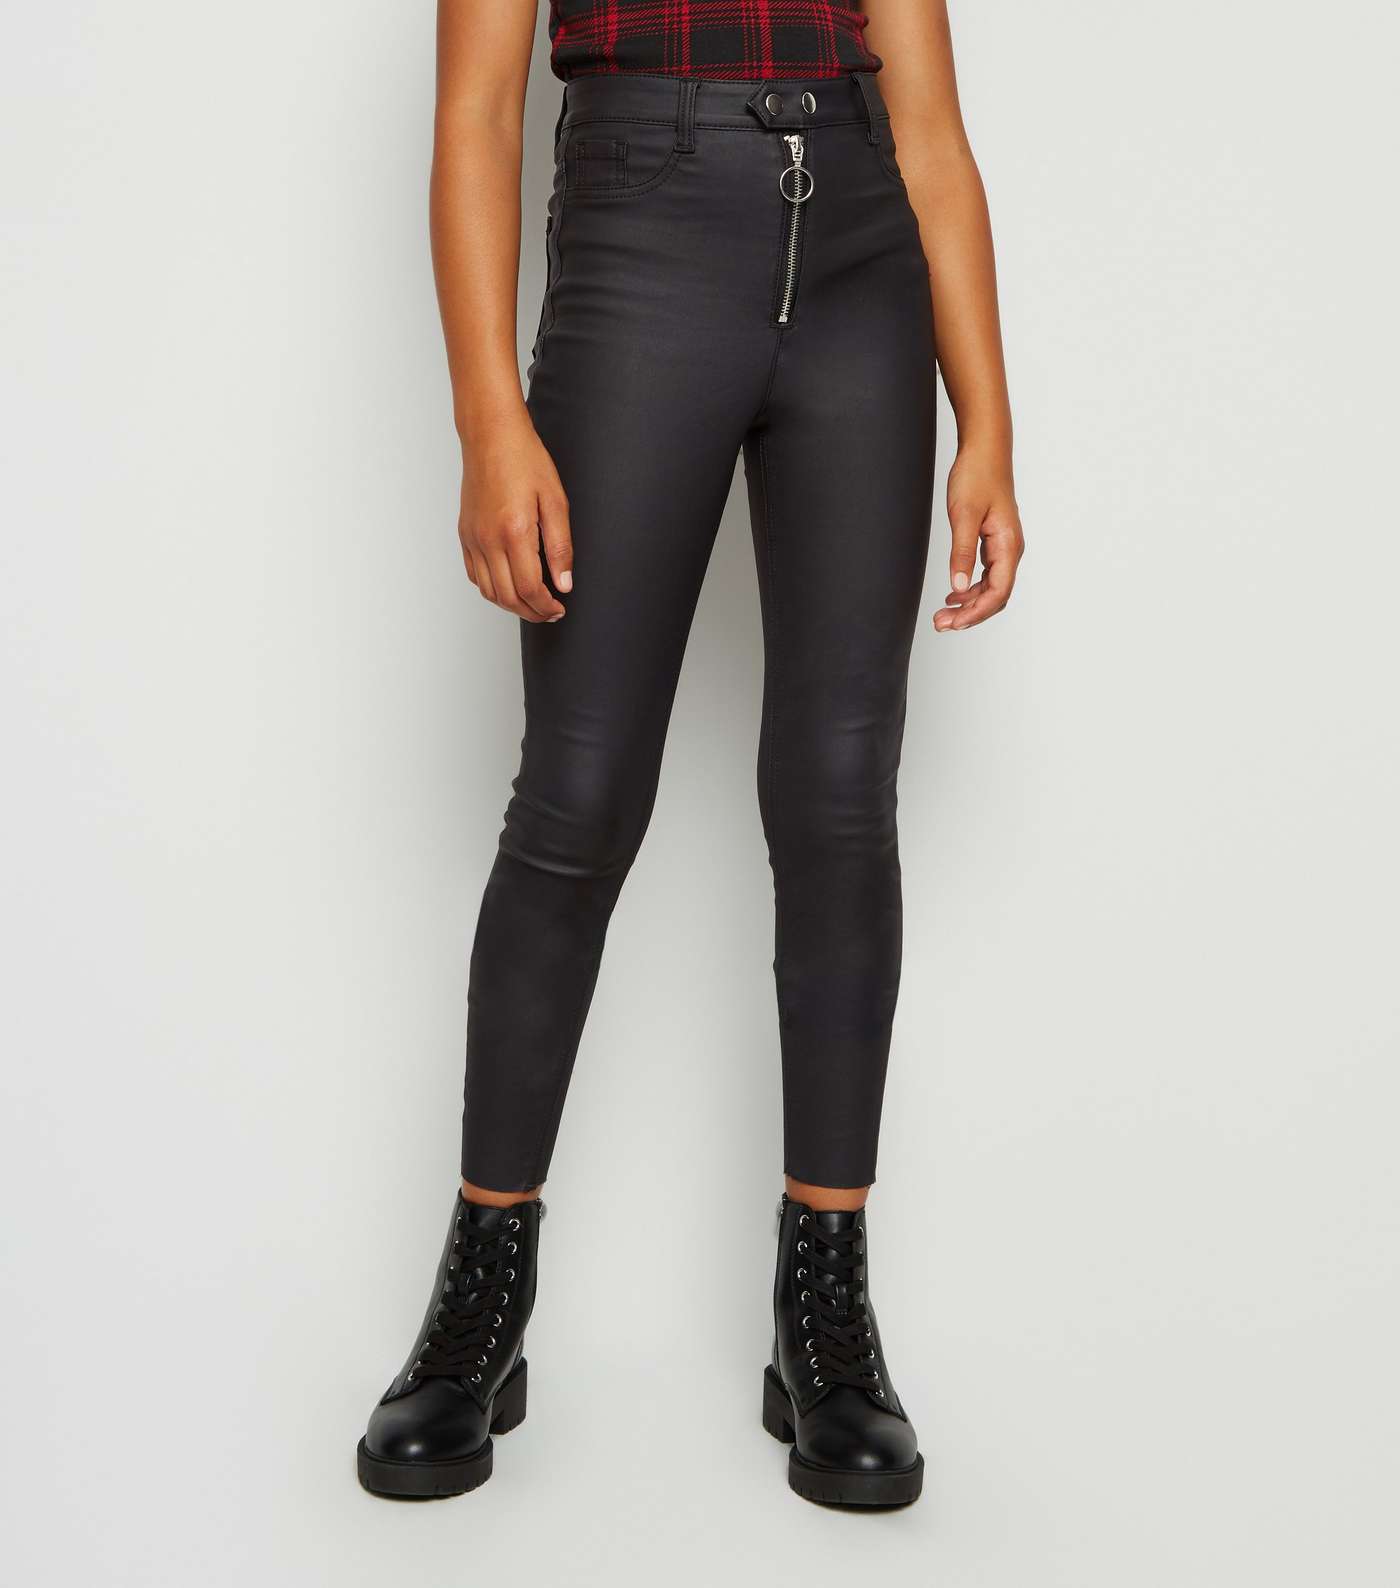 Girls Black Leather-Look High Waist Skinny Jeans Image 2